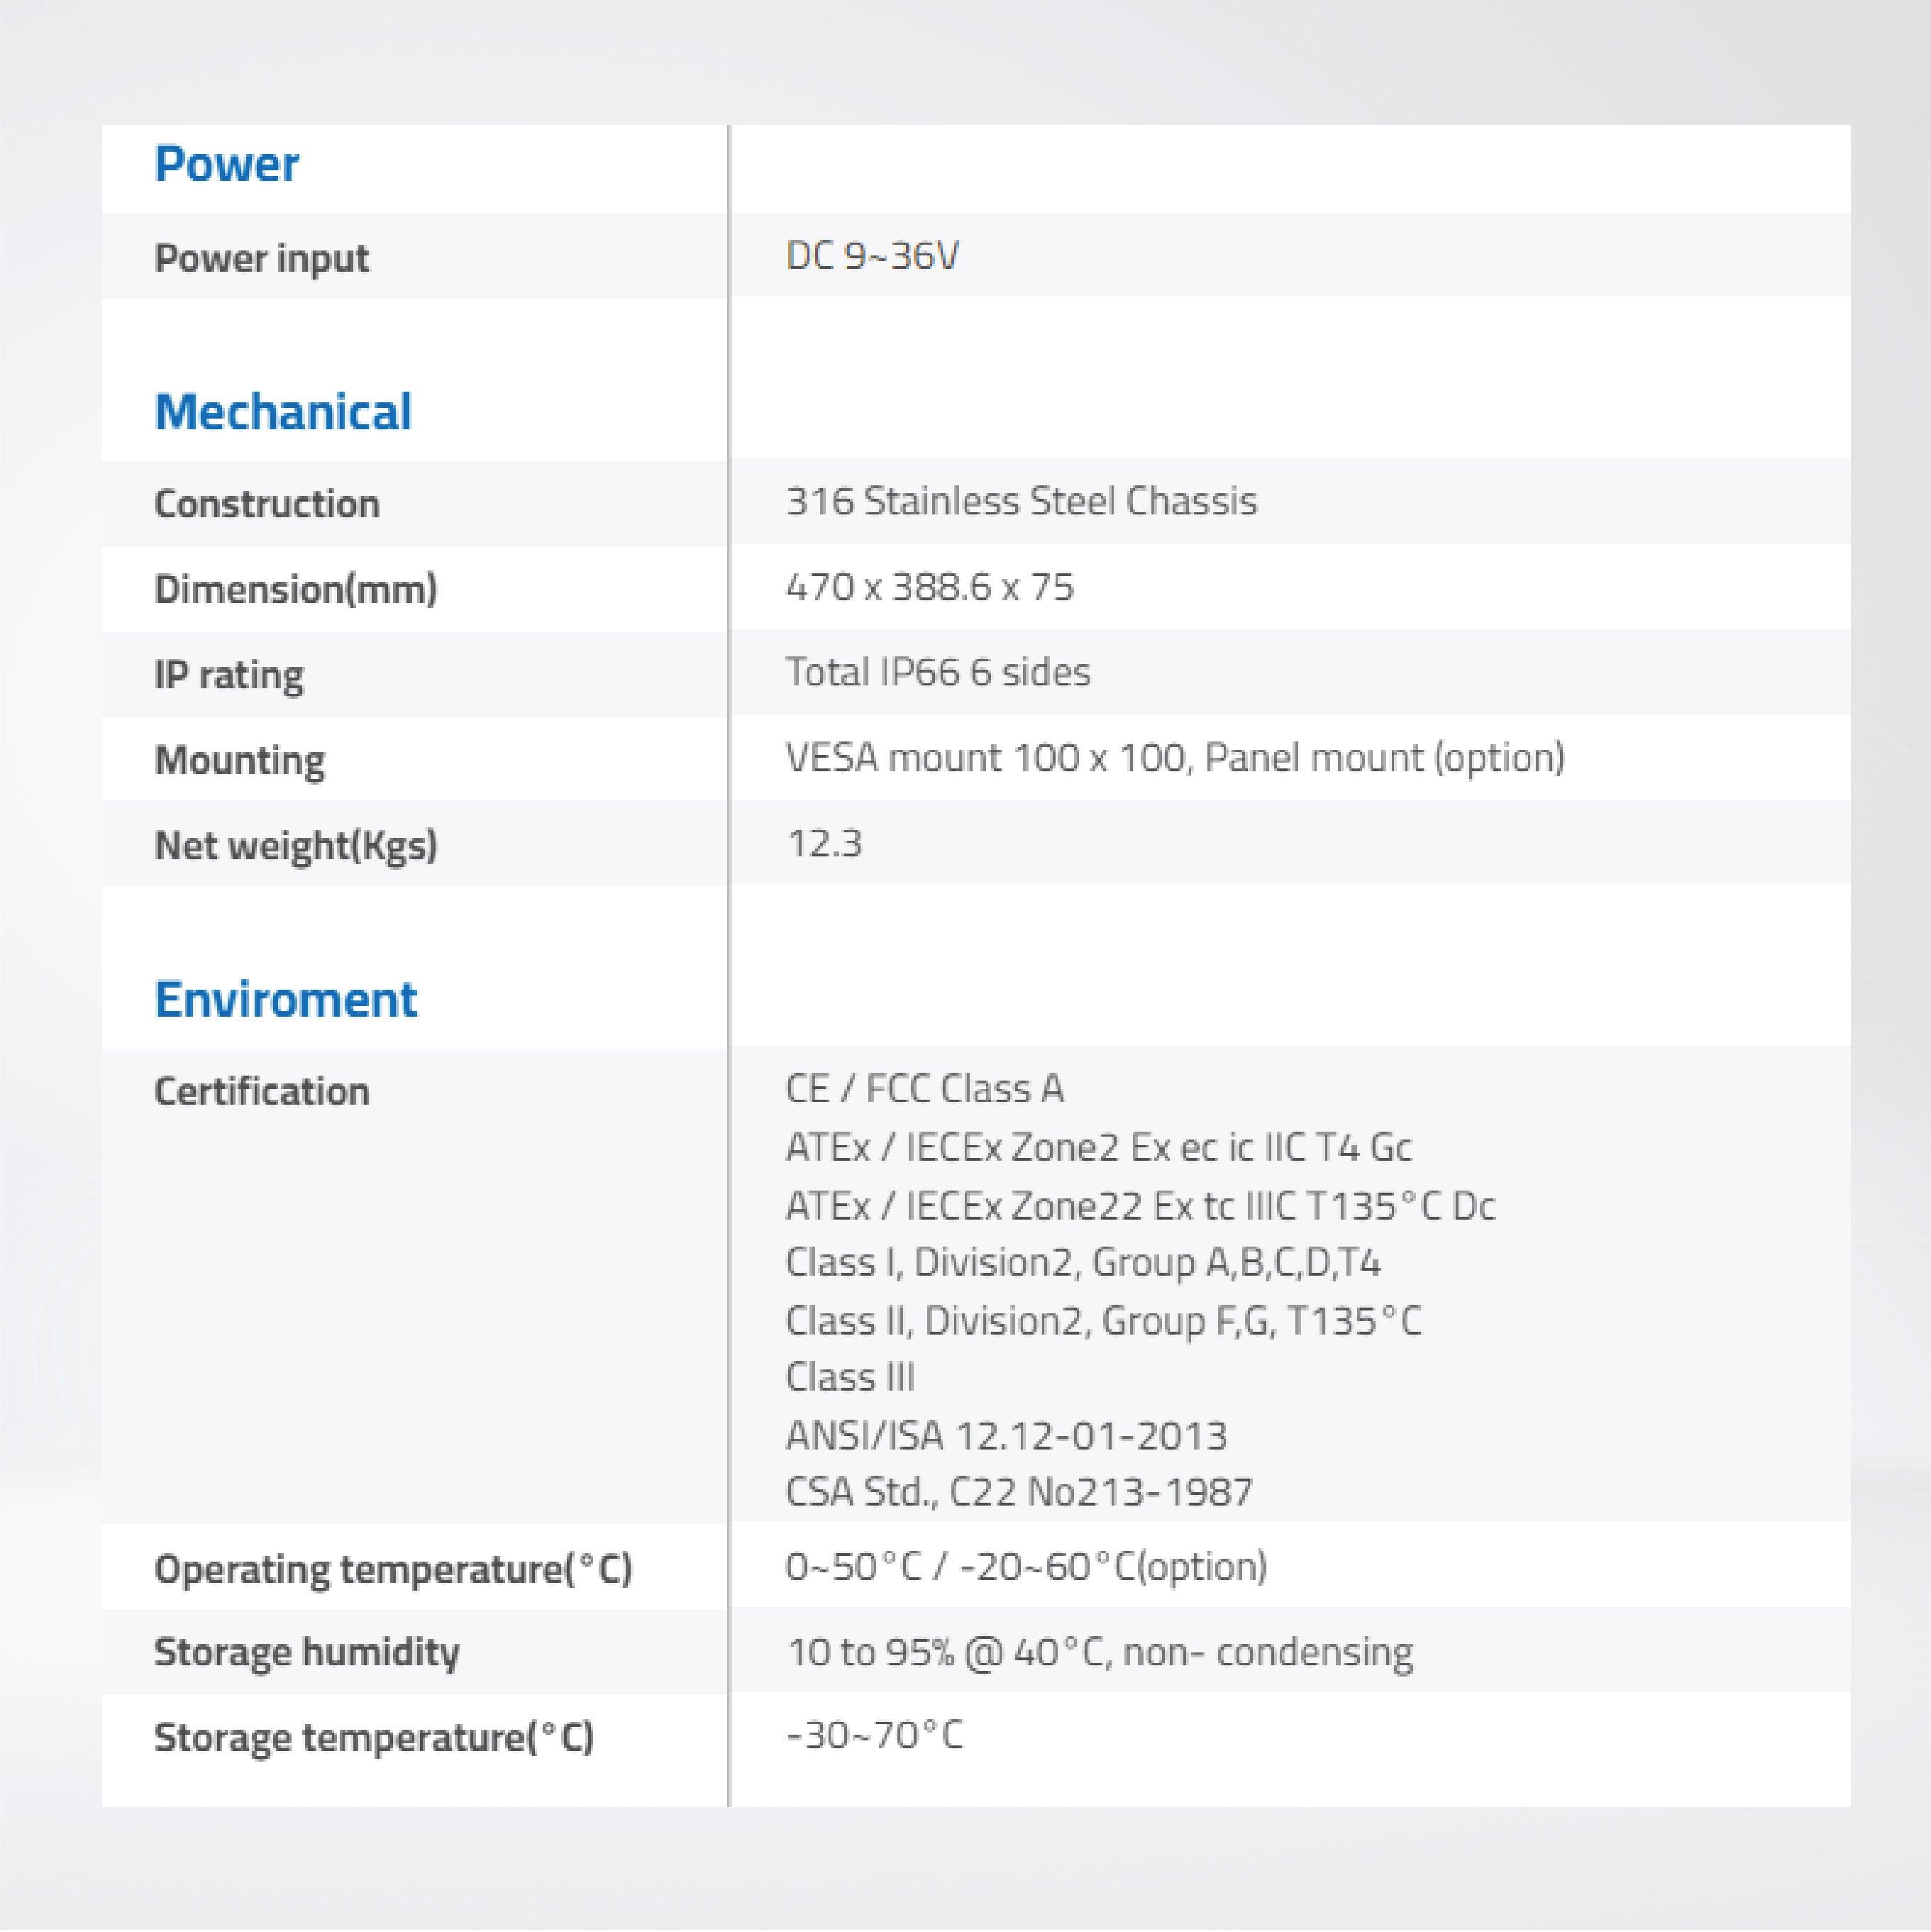 AEx-819P 19” Intel Celeron N2930 IP66 Stainless Steel Panel PC, Luminance : 350 (cd/m²) - Riverplus